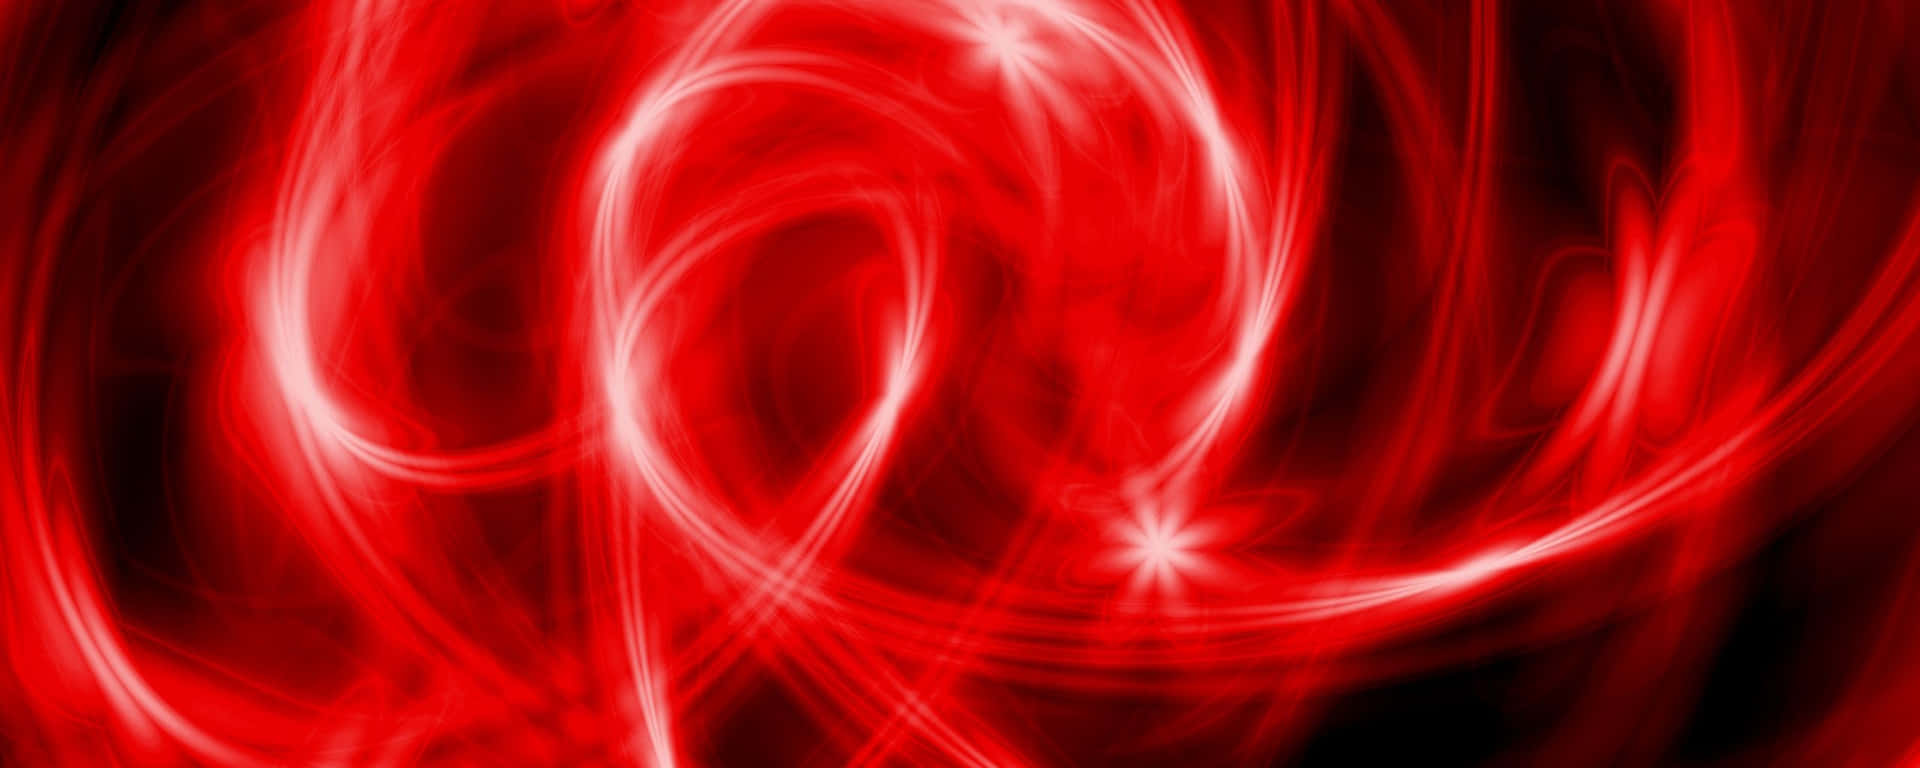 Wirbelndesneonlicht In Rot In Ultra-wide Hd Wallpaper